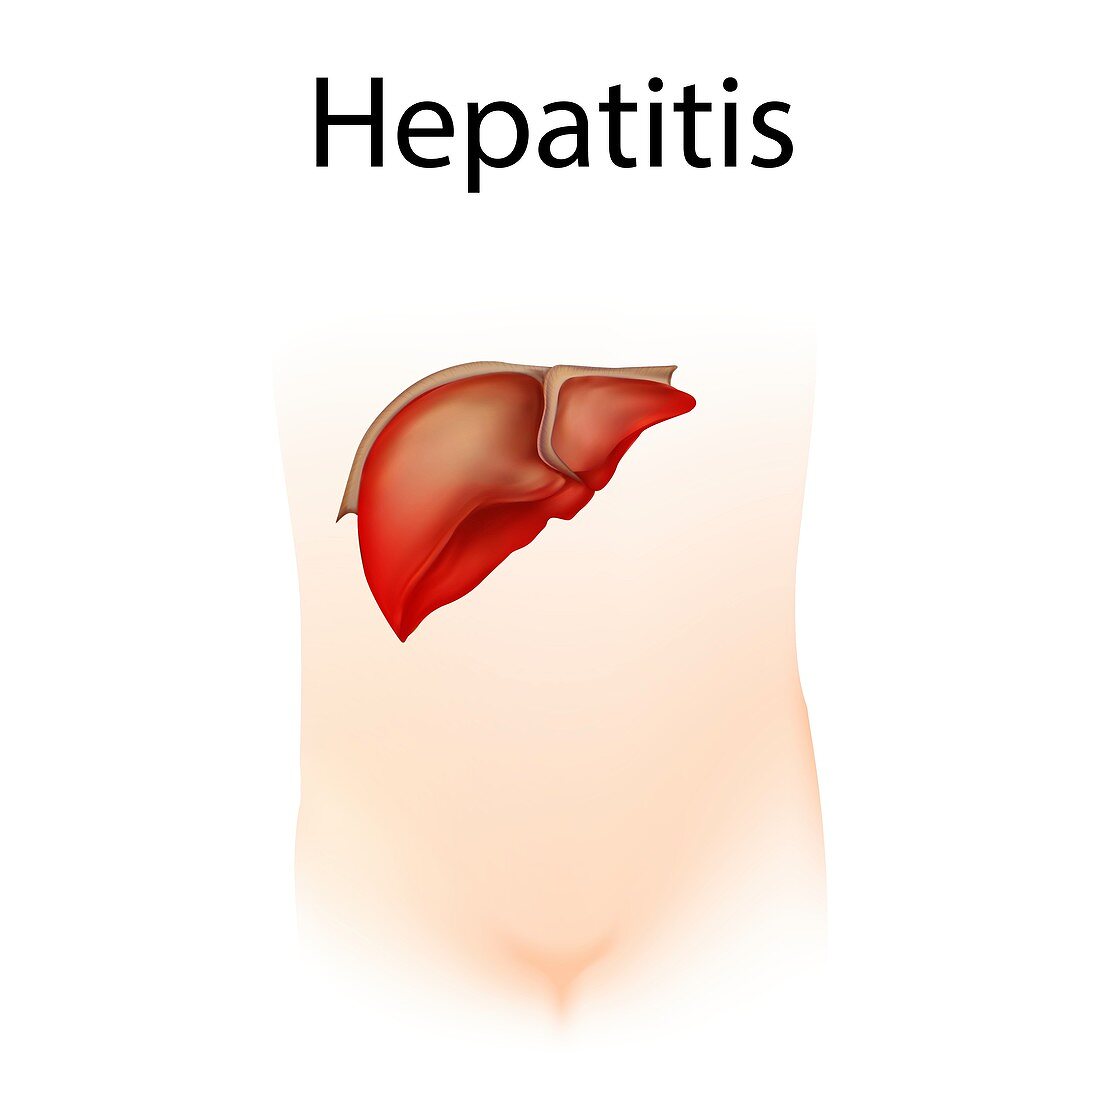 Hepatitis,illustration